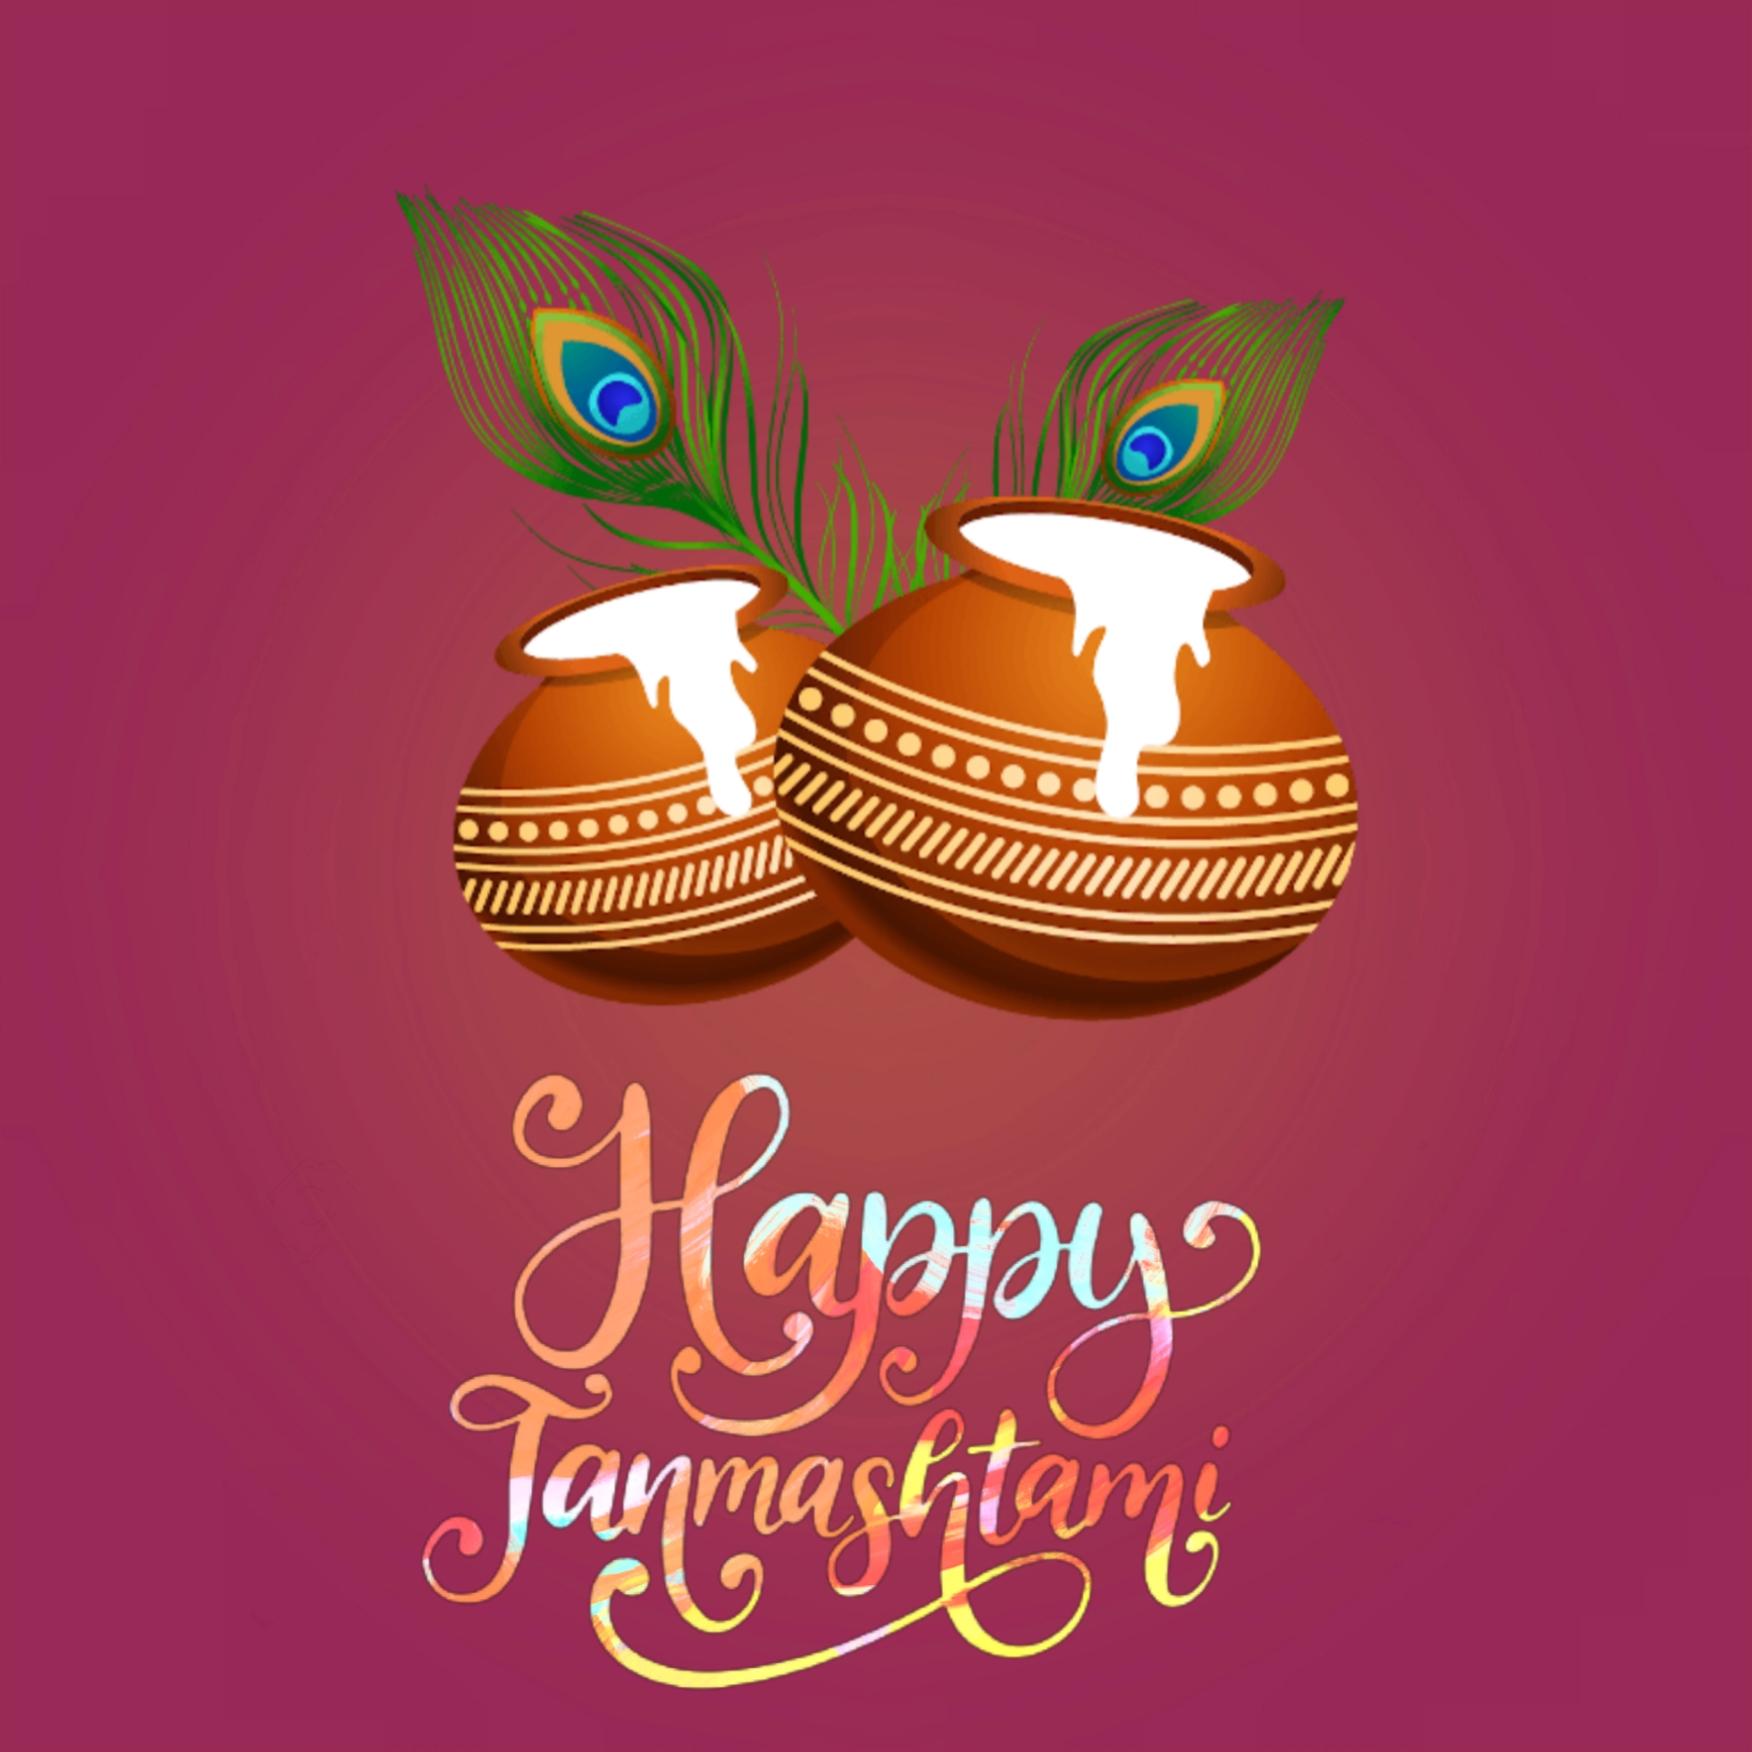 Lord Krishna Happy Janmashtami Images